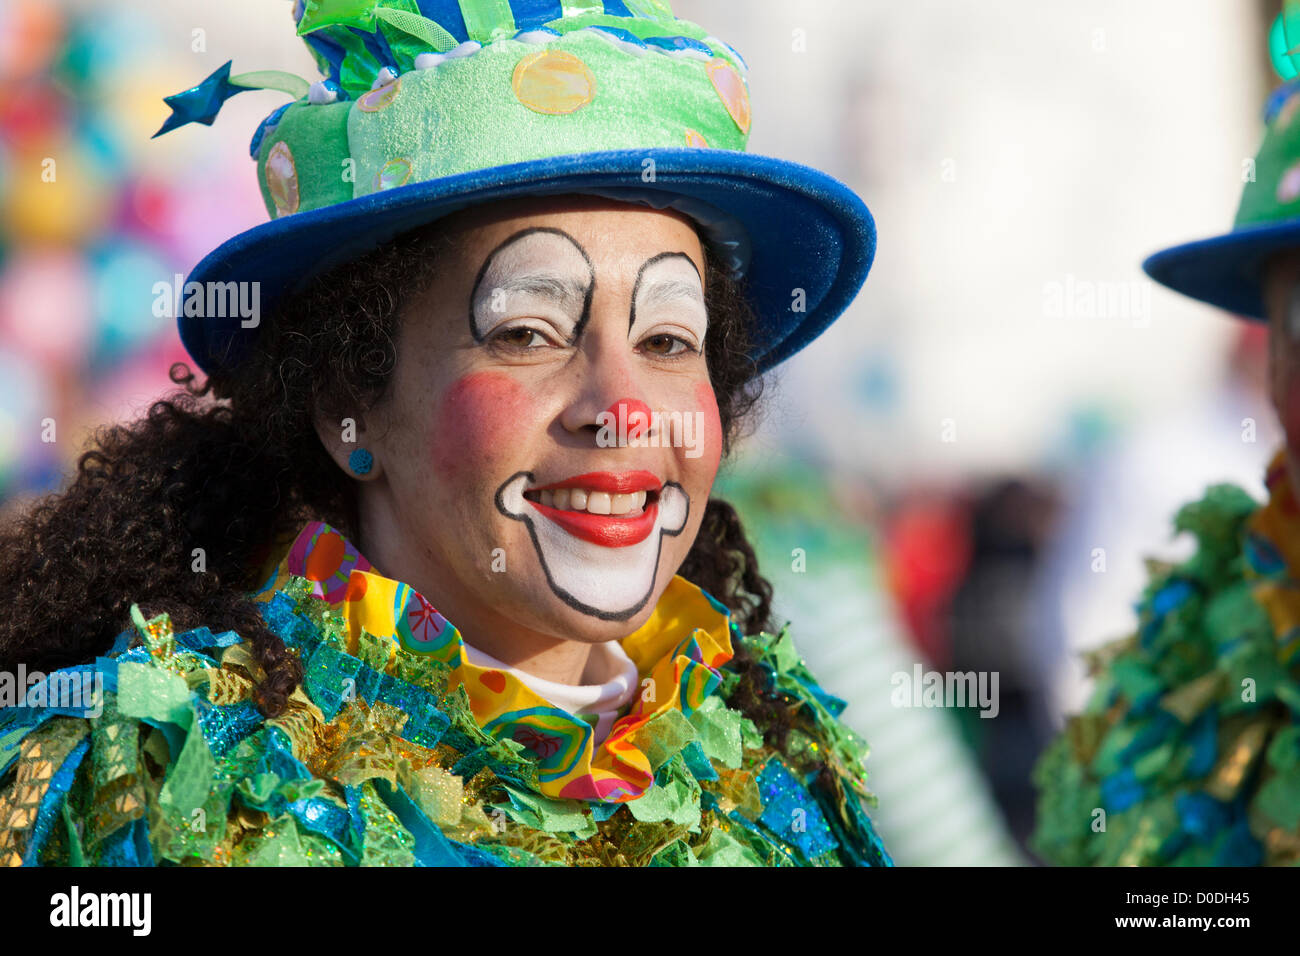 Smiling clown awaits the start of Macy's Thanksgiving Day Parade in New York City, on Thursday, Nov. 22, 2012. Stock Photo